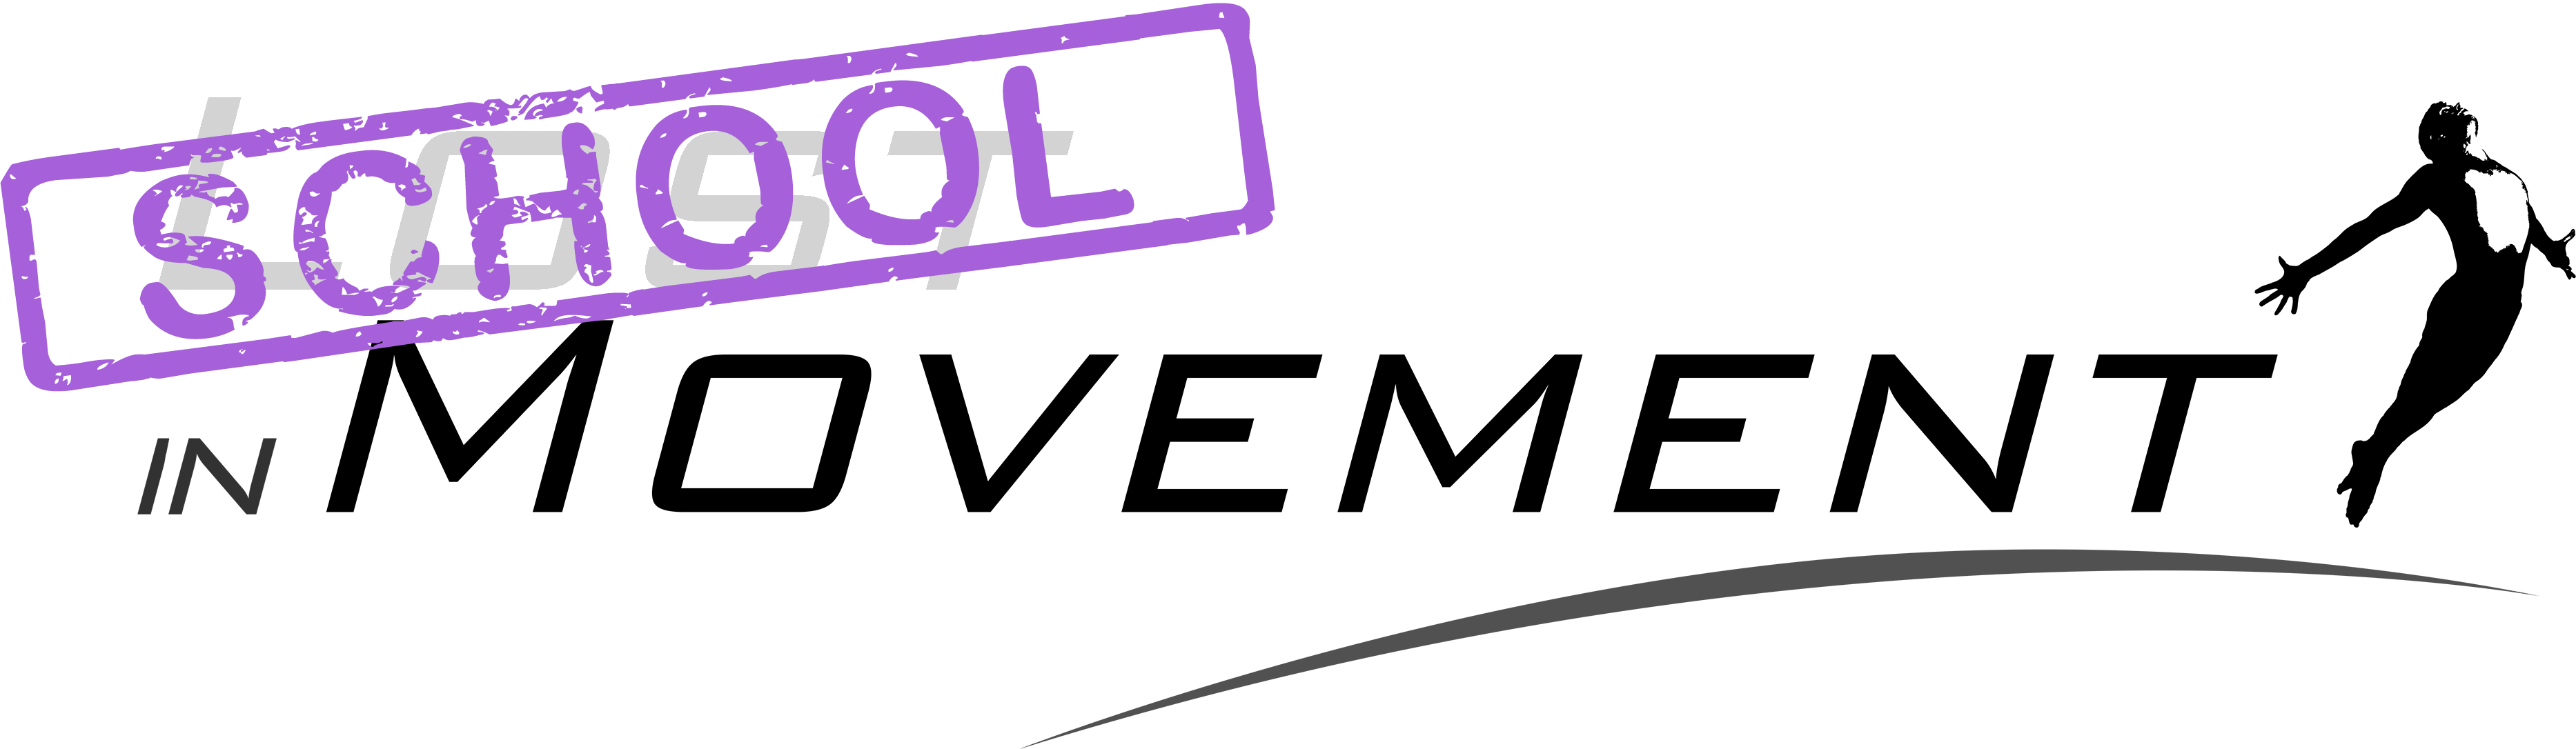 Logo School in Movement